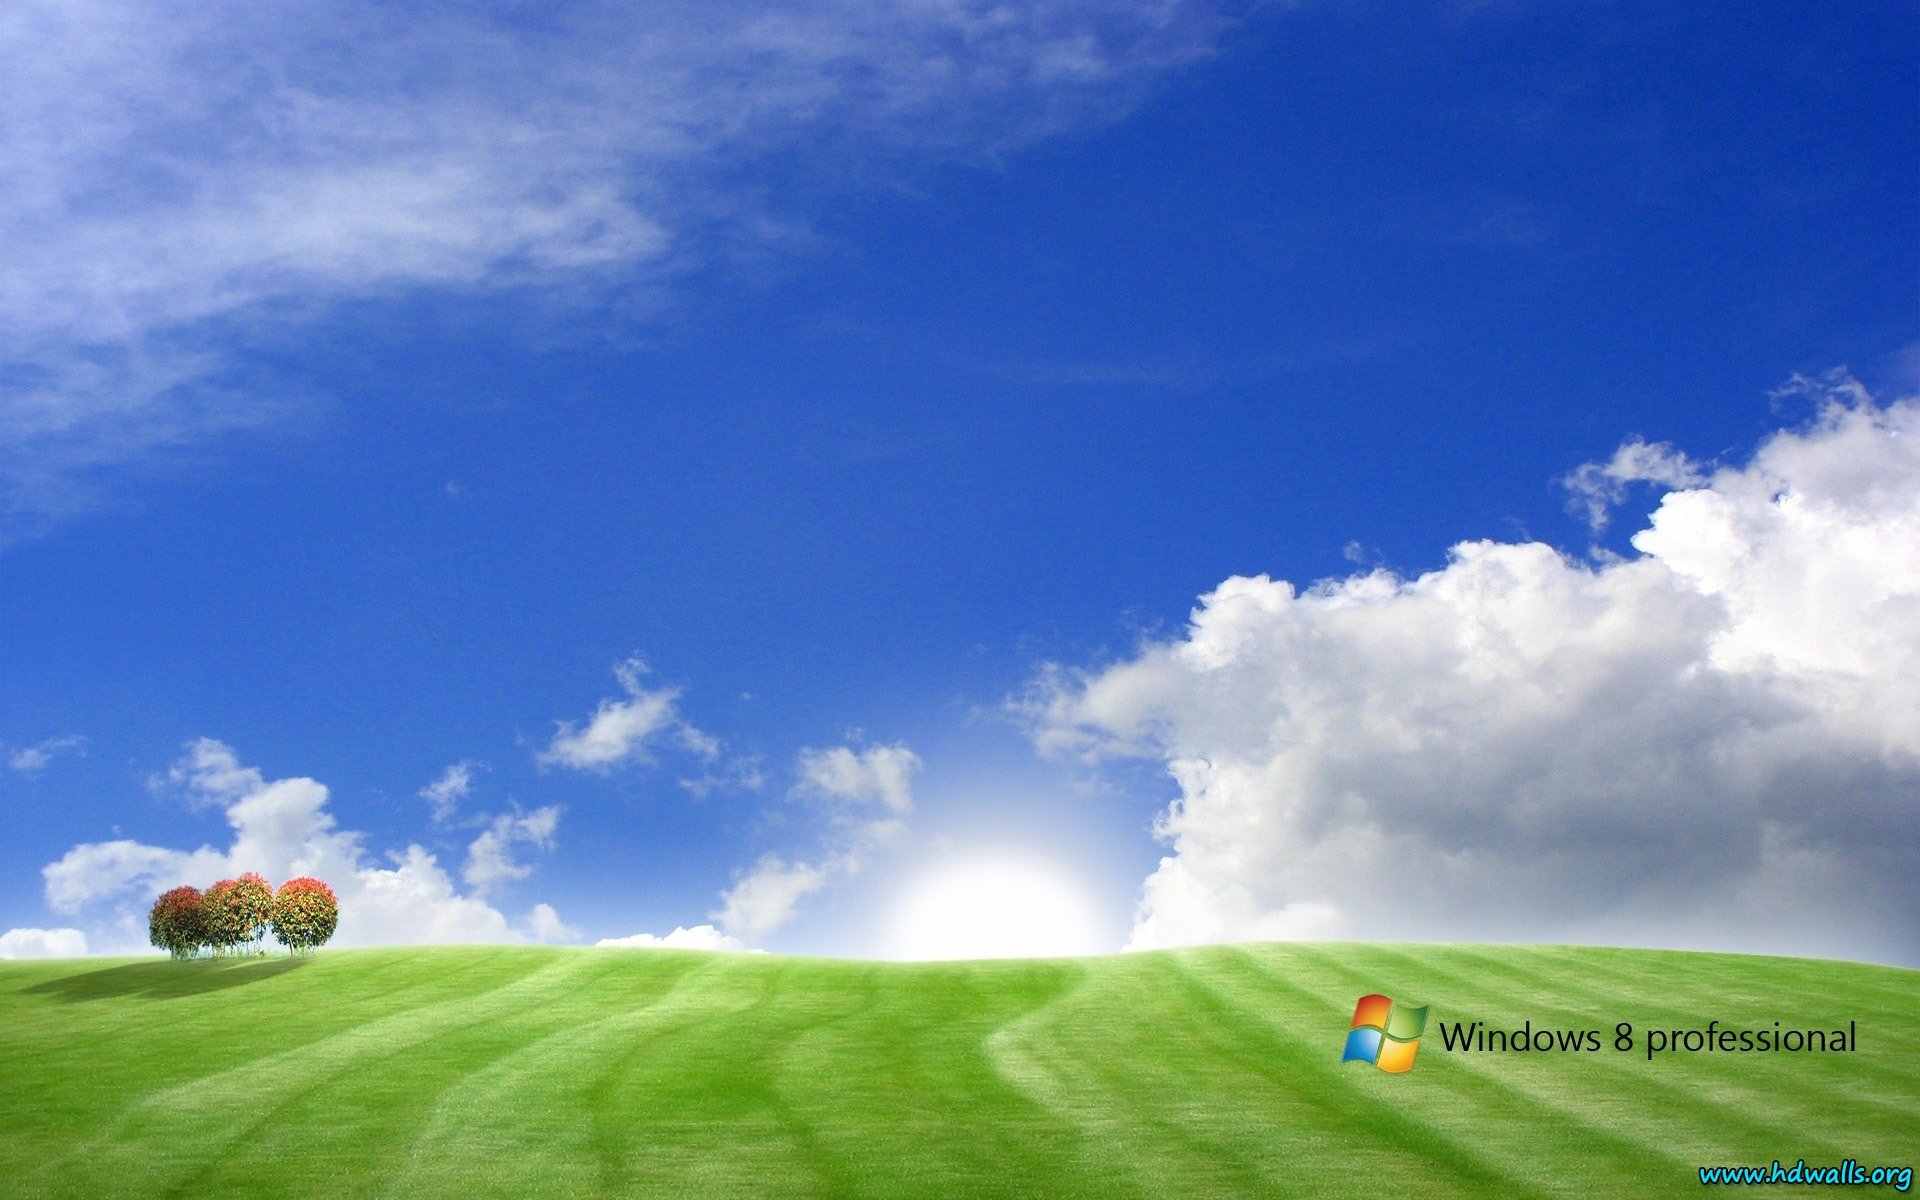 Windows 8 10 wallpaper background in HD Widescreen resolution